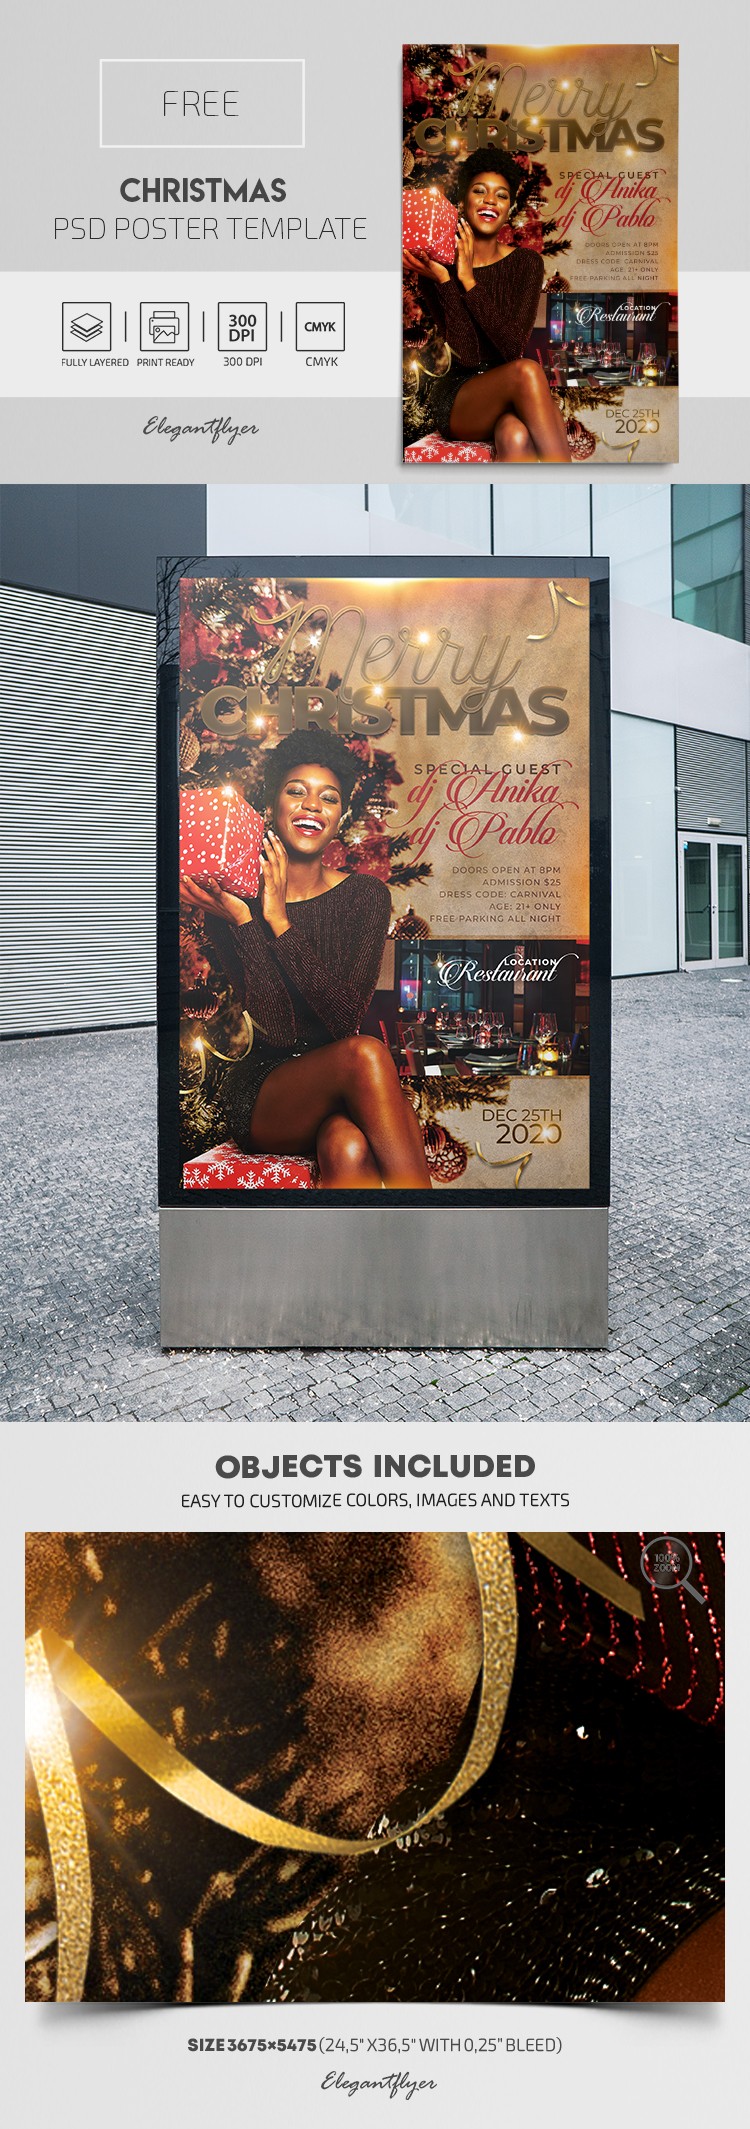 Christmas Poster by ElegantFlyer